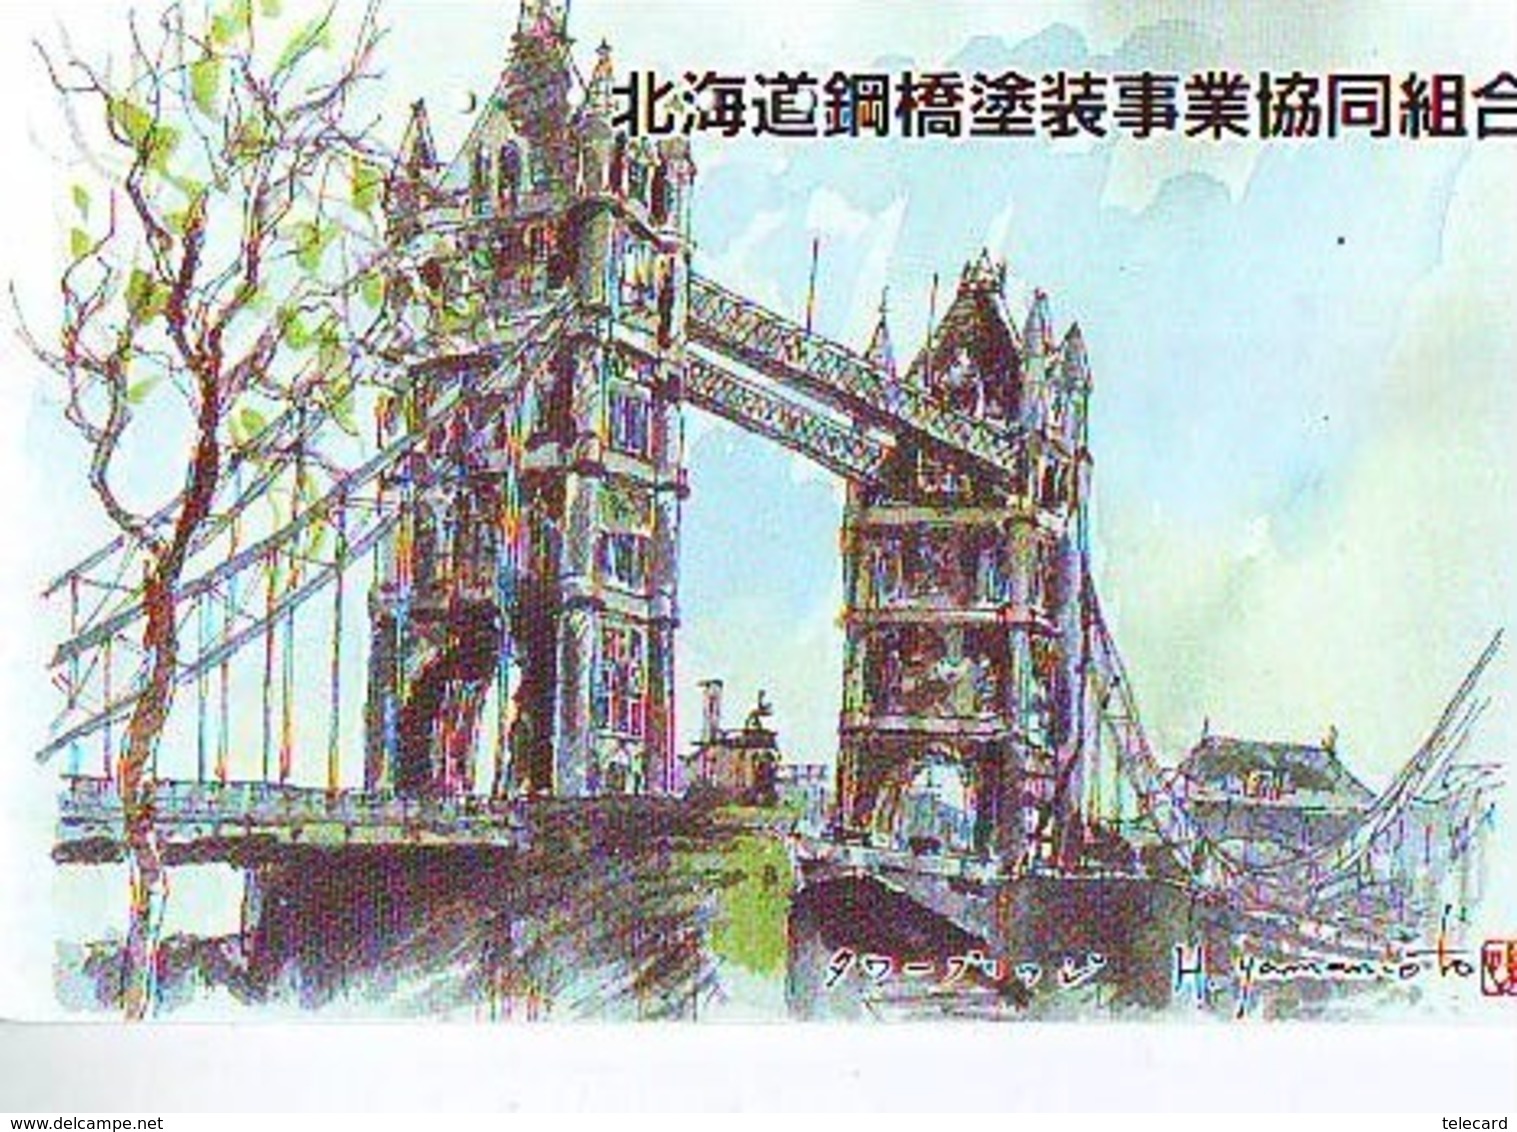 Télécarte Japon ANGLETERRE (304) GREAT BRITAIN Related * ENGLAND Phonecard Japan * TOWER BRIDGE * LONDON - Paysages